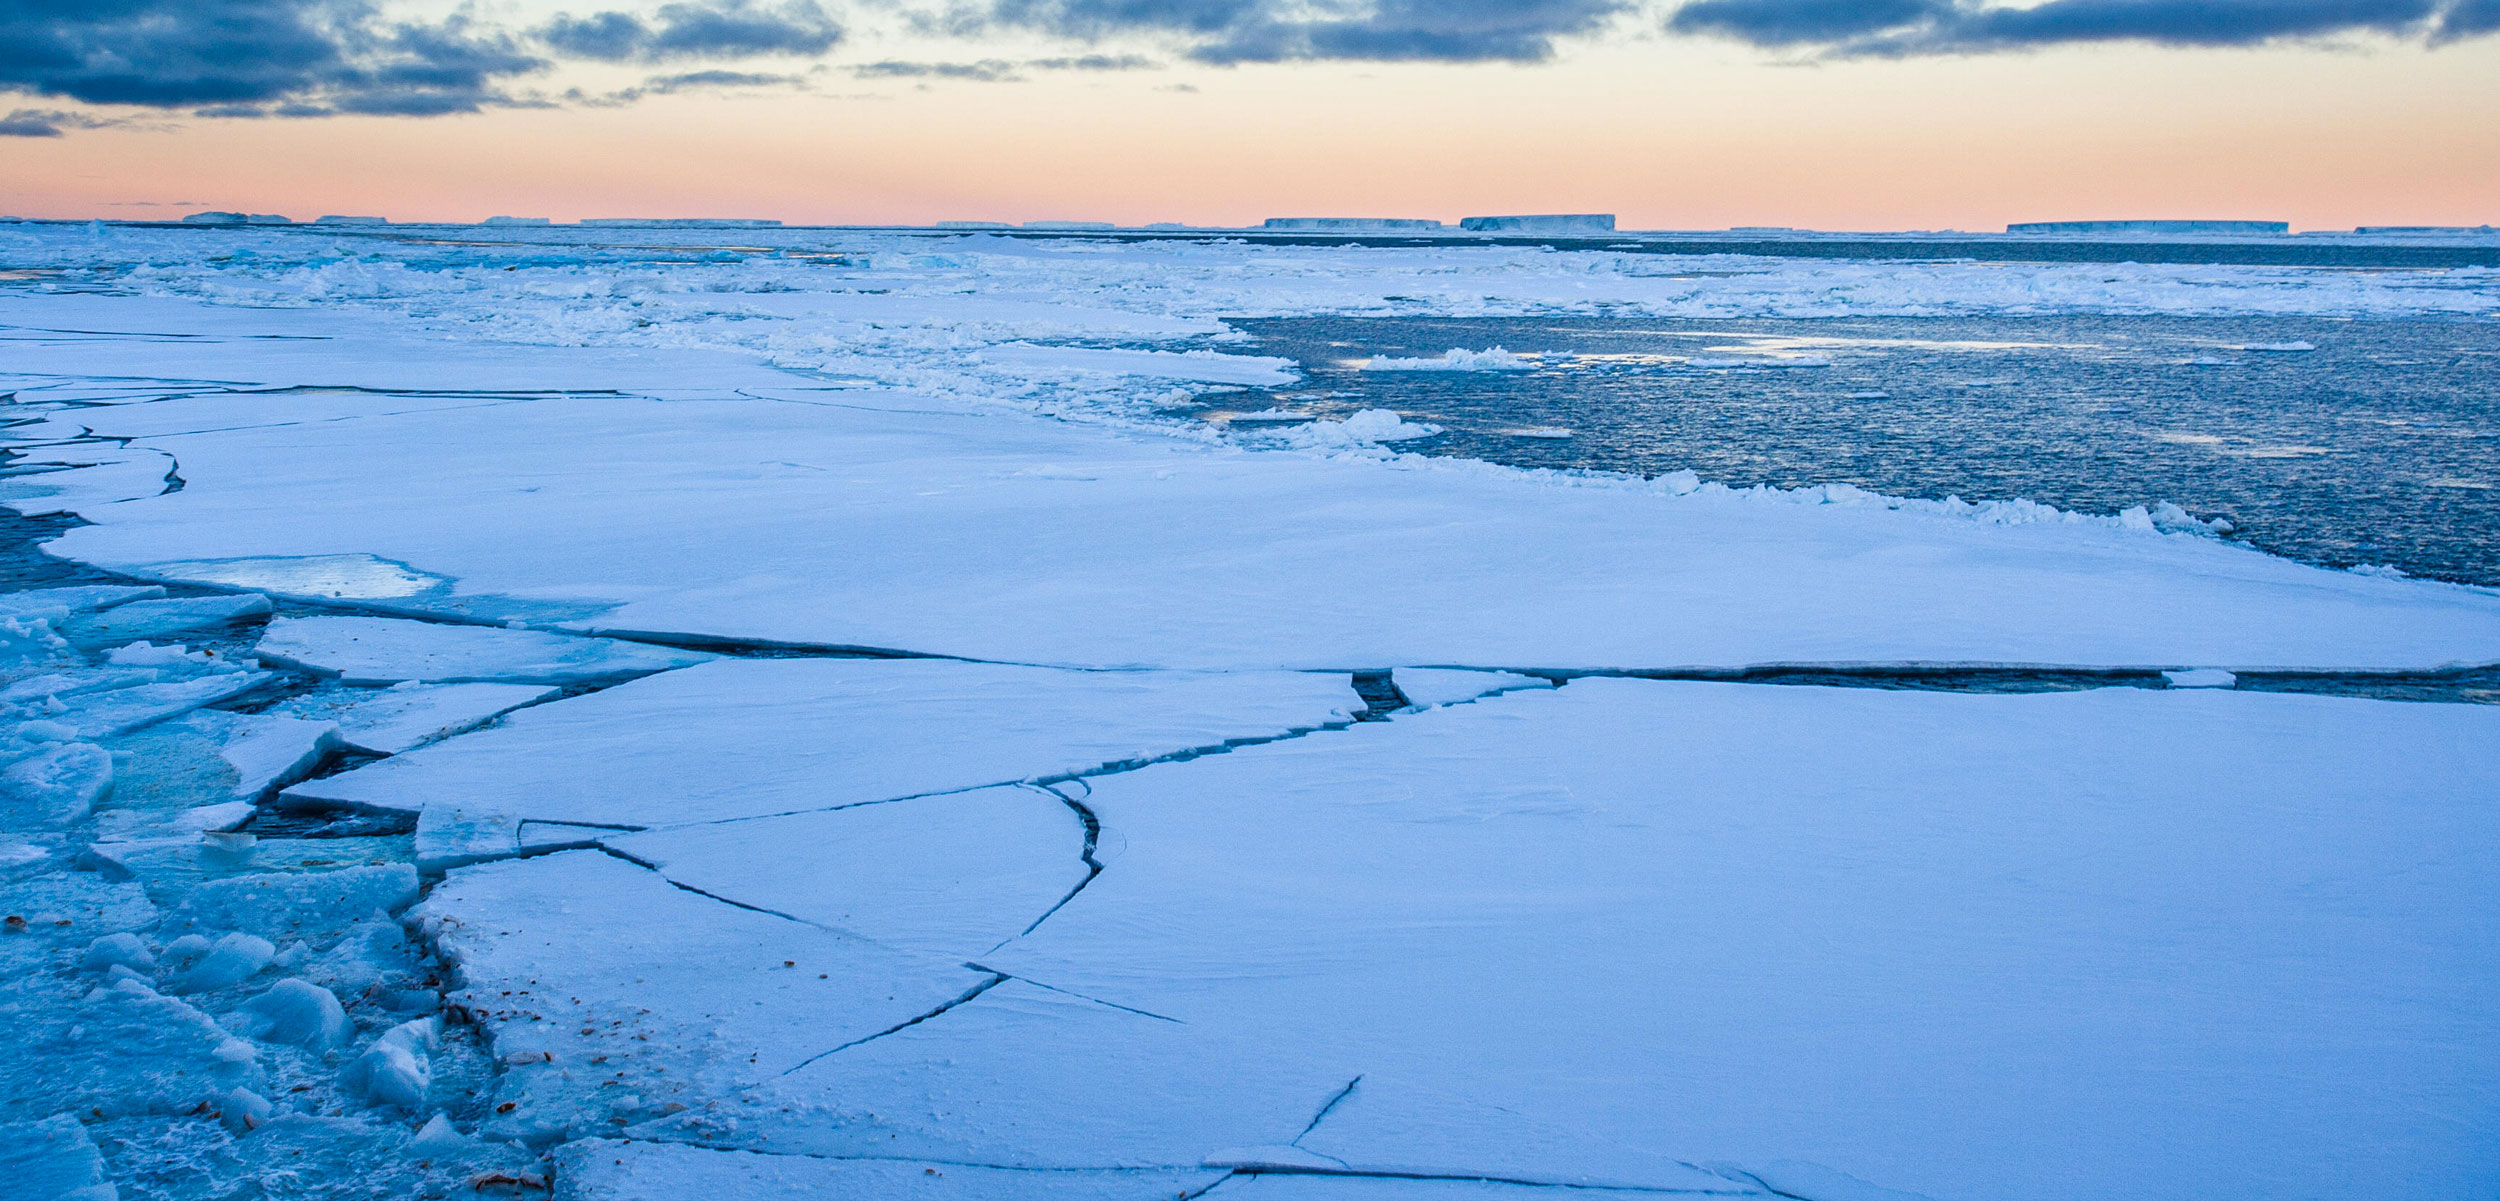 Broken and melting sea ice in the Weddell Sea, Antarctica